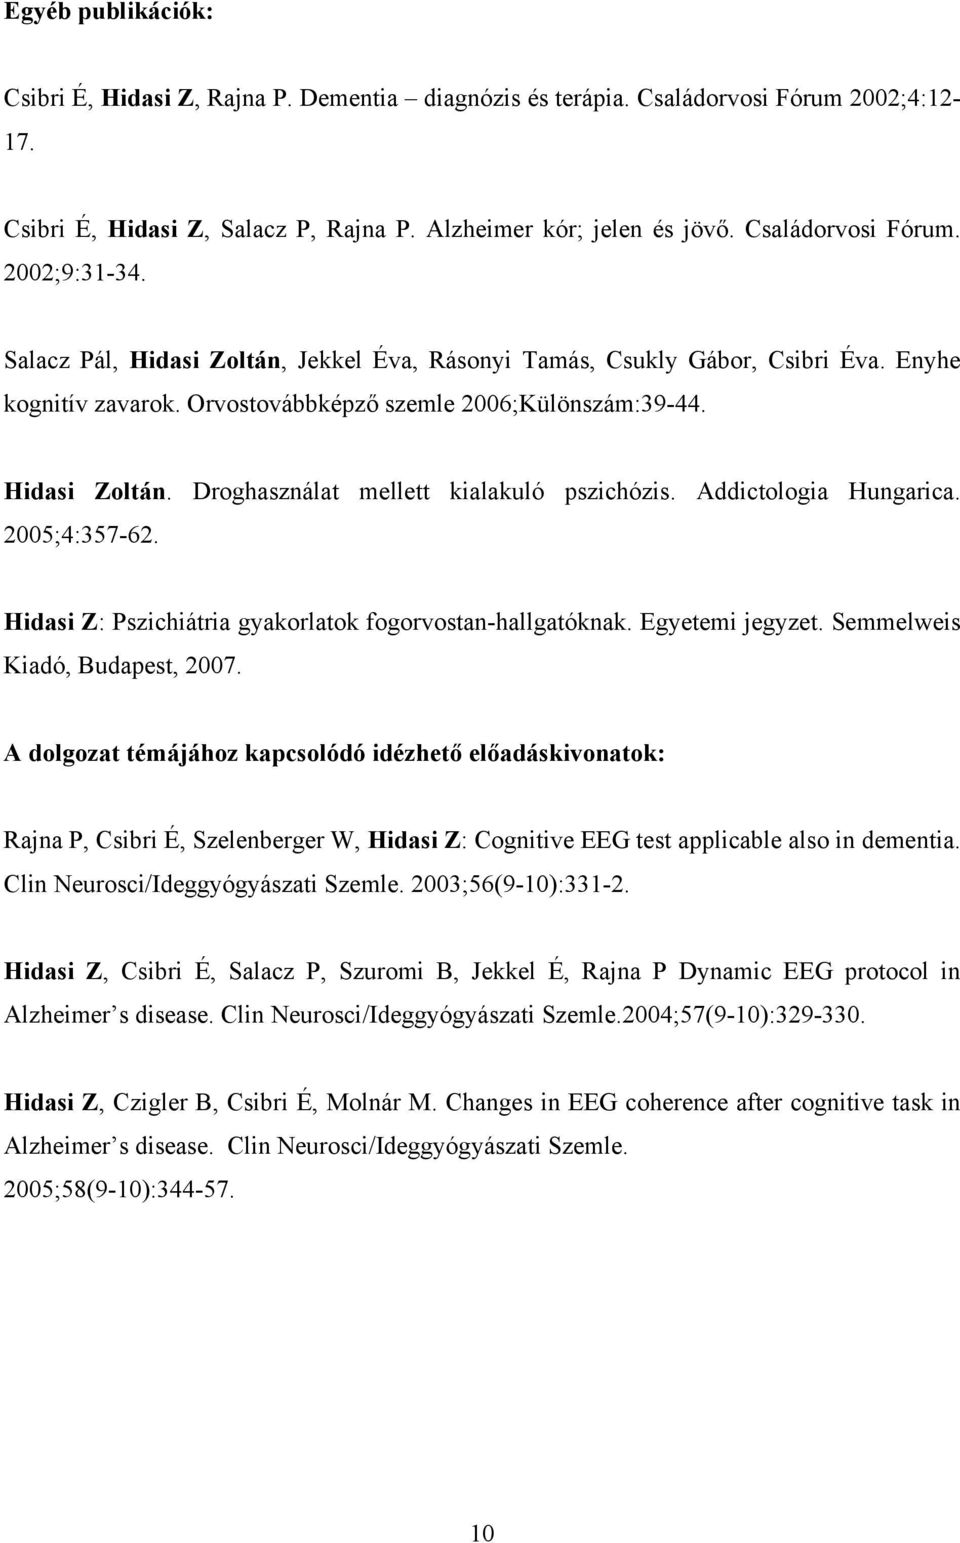 Addictologia Hungarica. 2005;4:357-62. Hidasi Z: Pszichiátria gyakorlatok fogorvostan-hallgatóknak. Egyetemi jegyzet. Semmelweis Kiadó, Budapest, 2007.